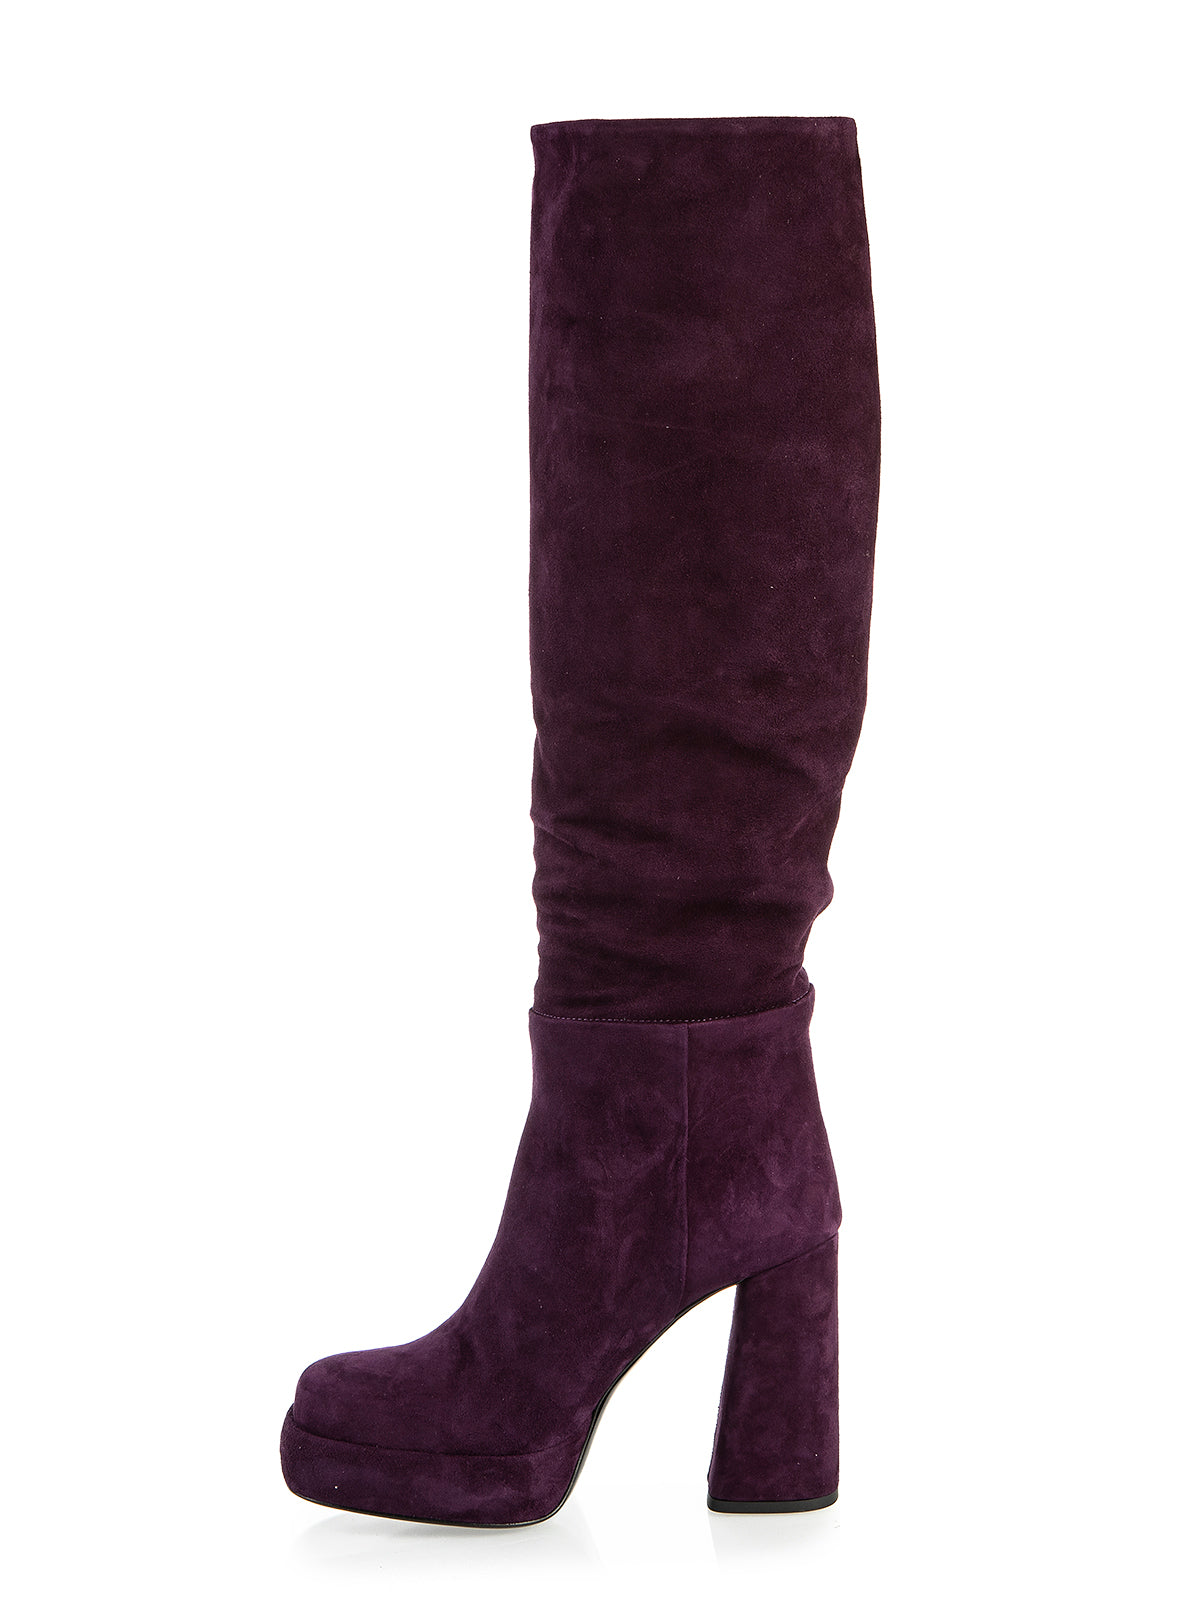 8709 Fabi Boots / Violet